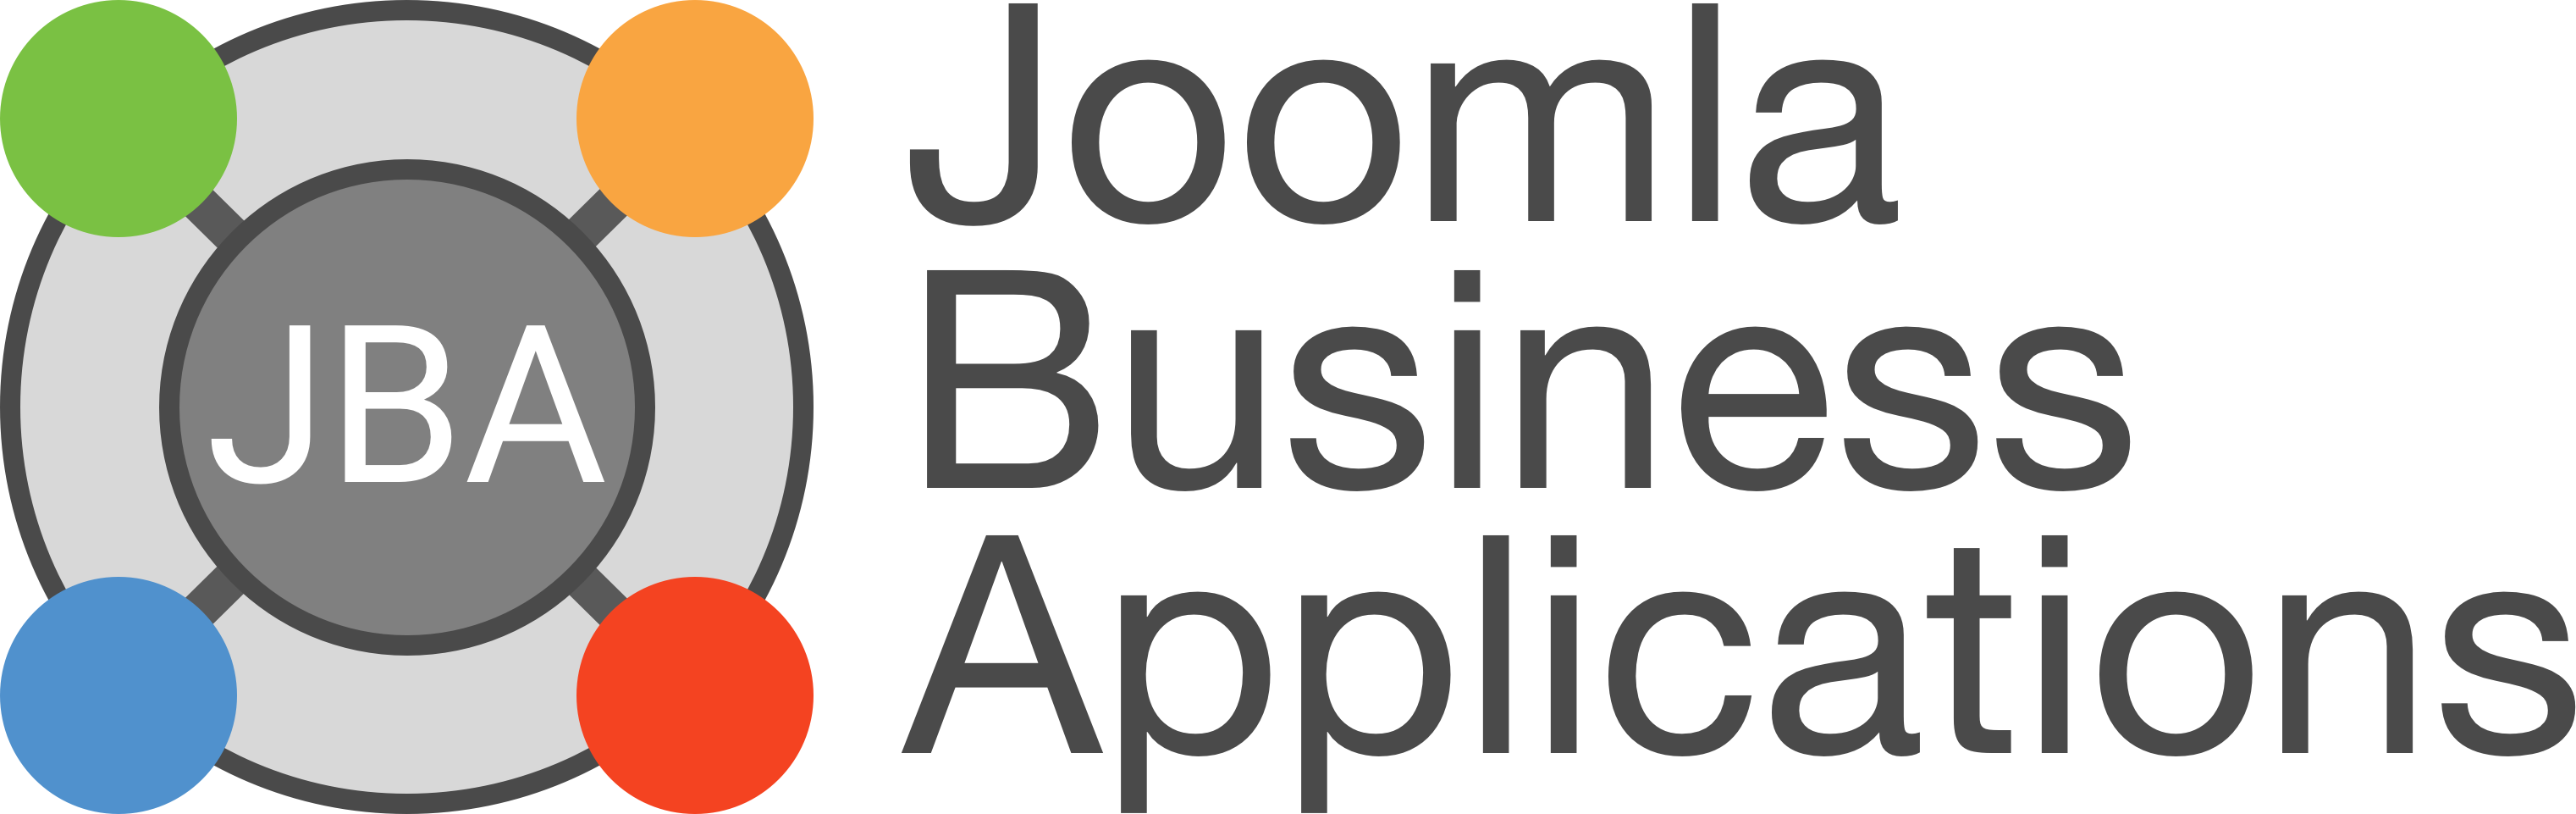 JBA logo2017